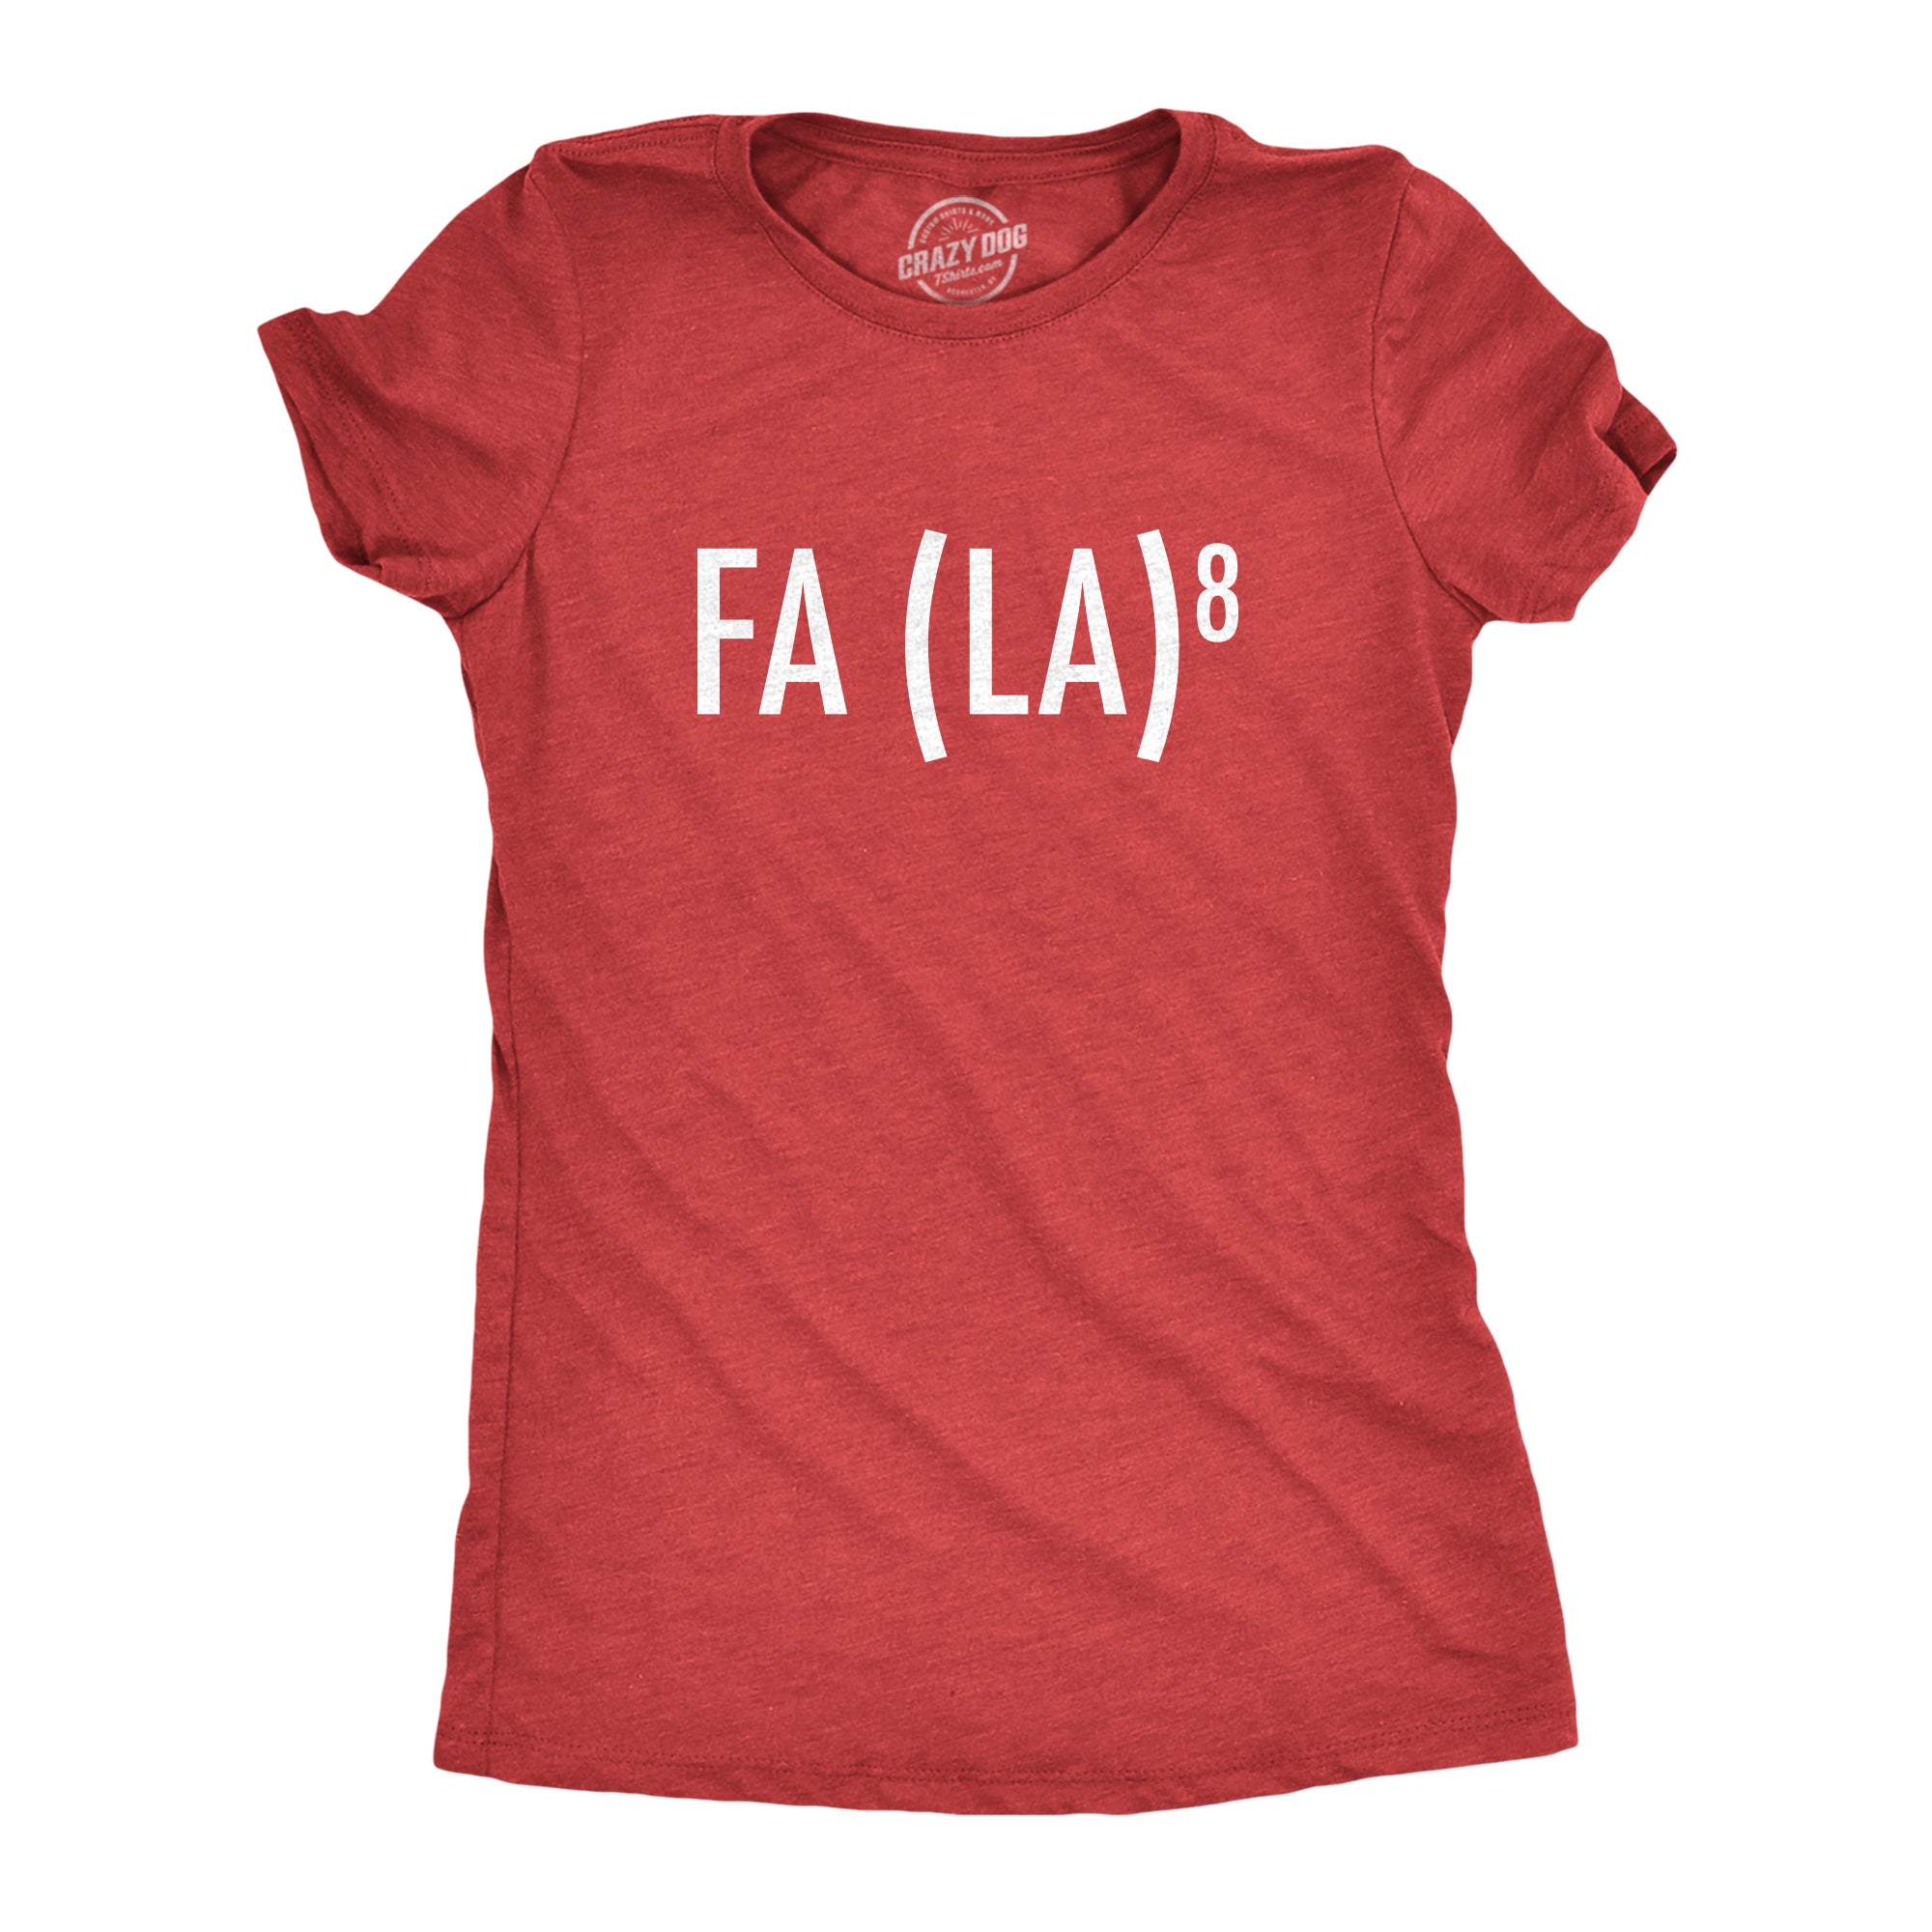 Funny Heather Red - Fa La Fa (La)8 Womens T Shirt Nerdy Christmas Science Tee